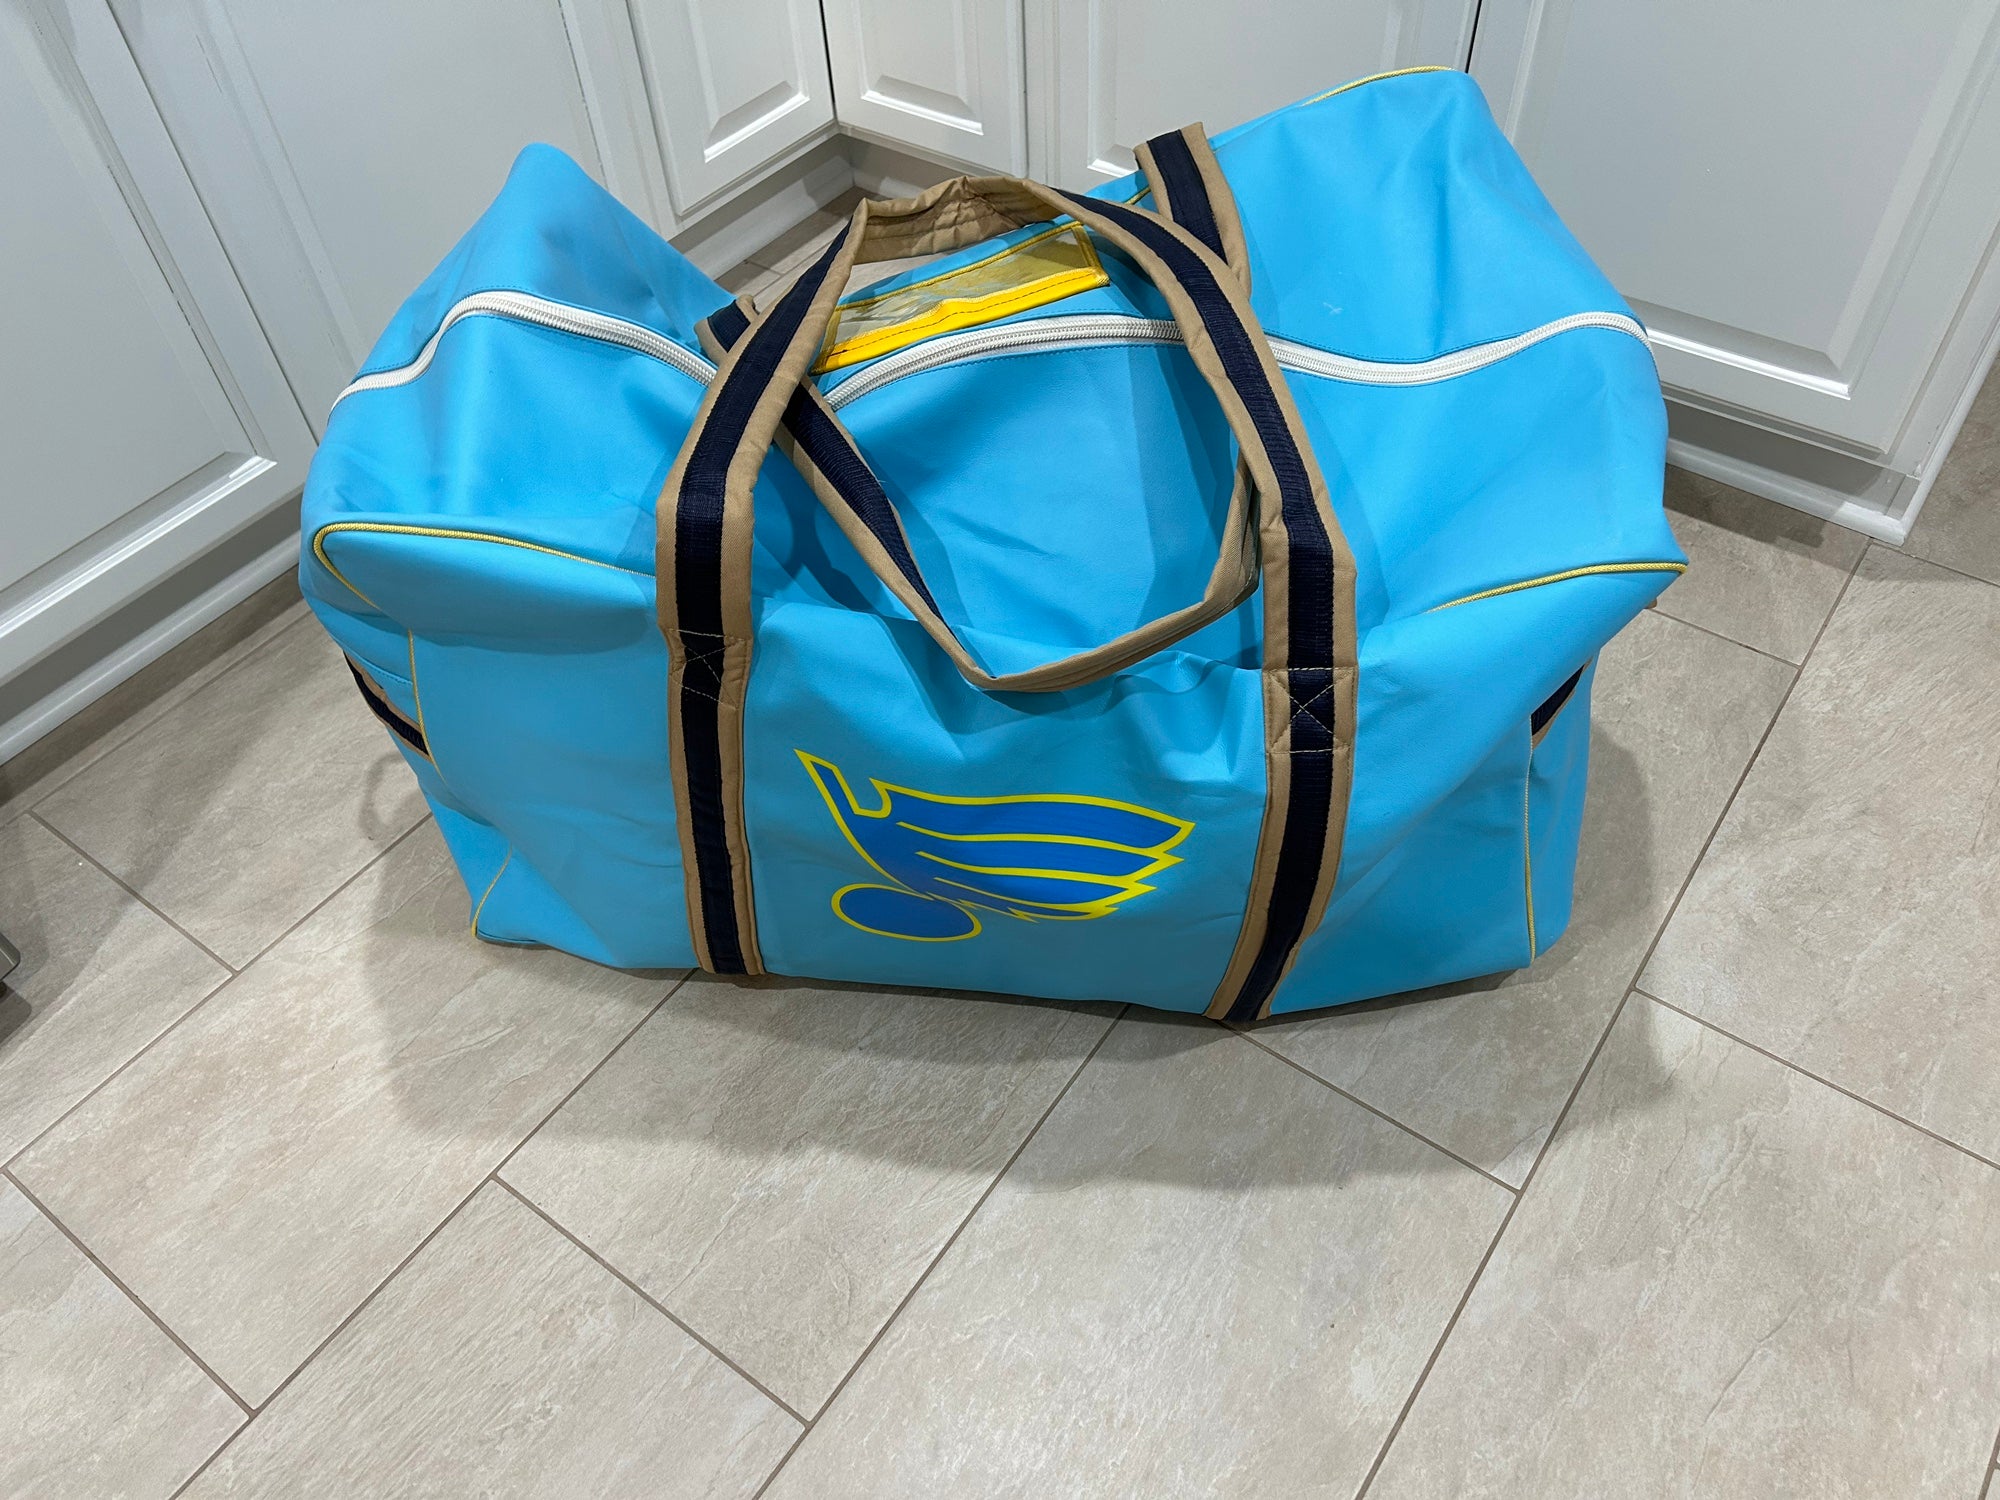  St. Louis Blues Team NHL National Hockey League Luggage Tag Bag  (PVC Luggage Tag) : Clothing, Shoes & Jewelry